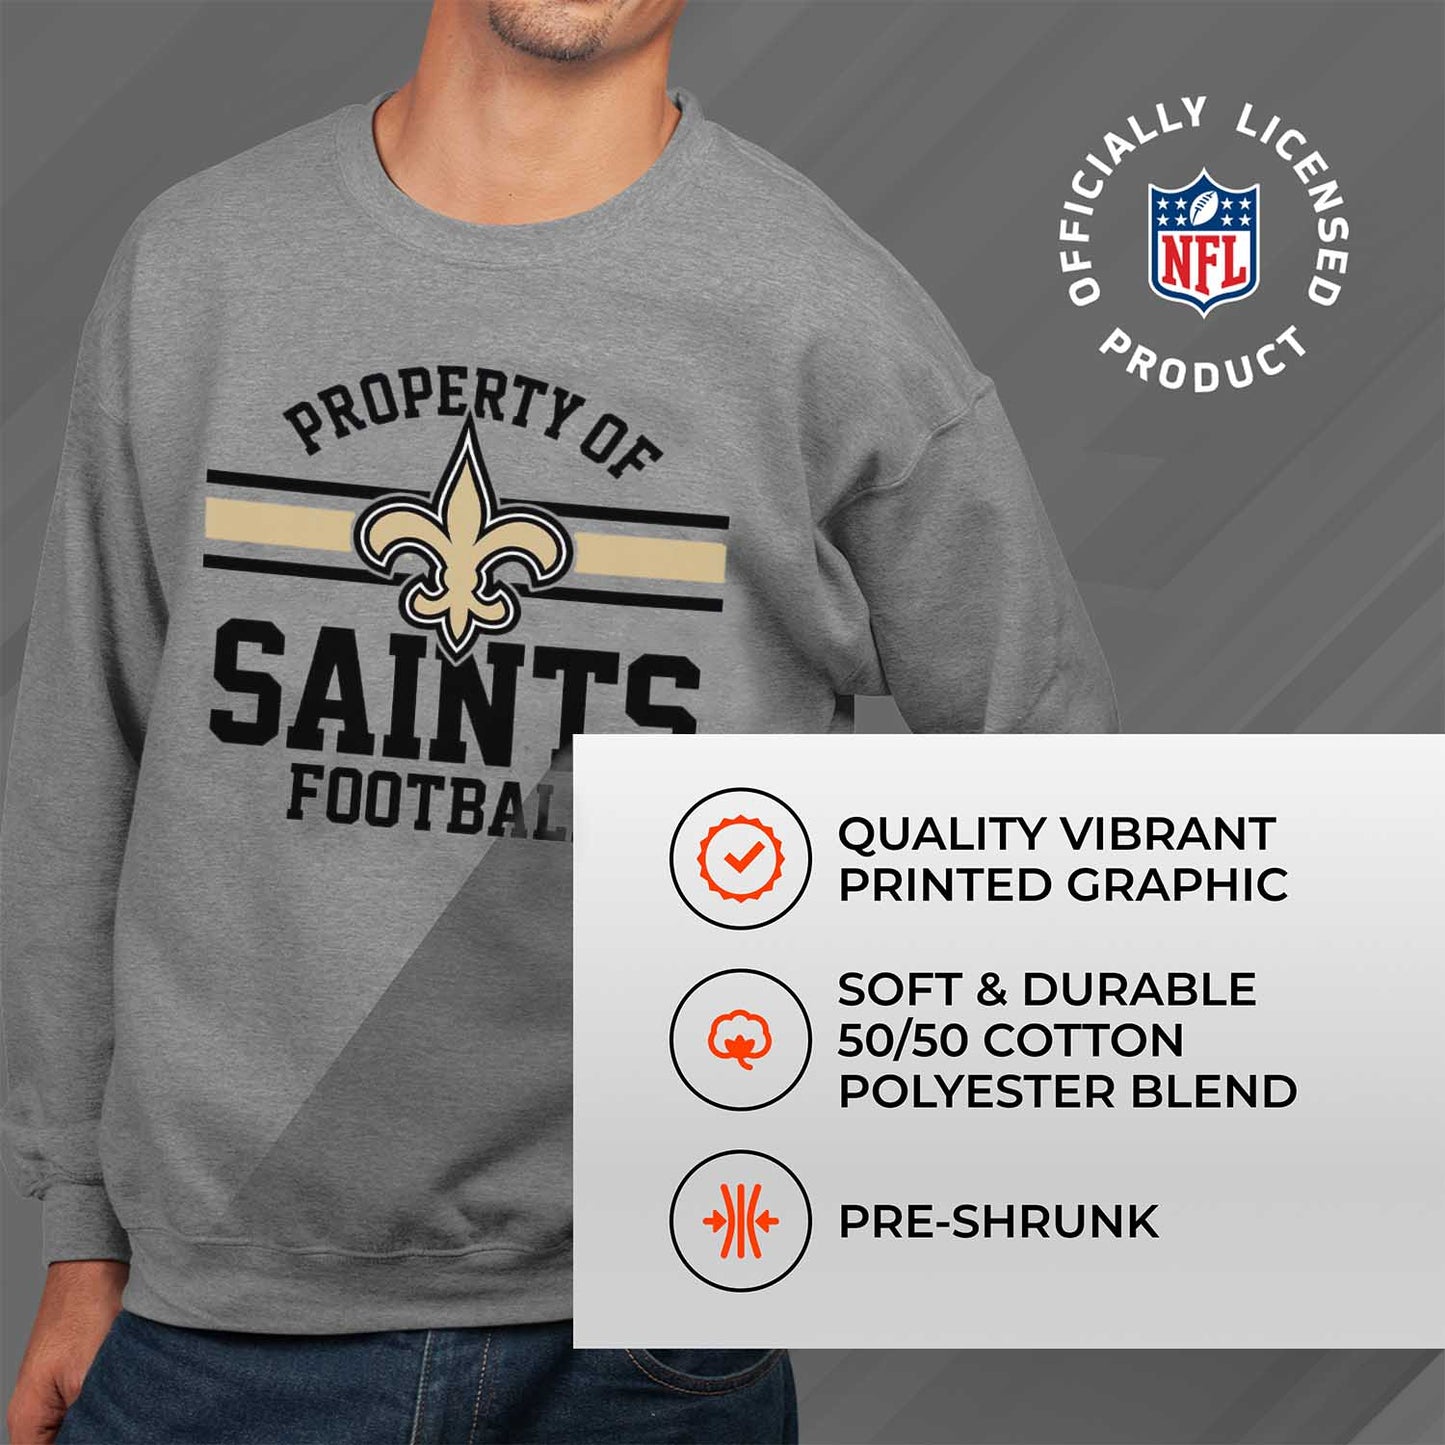 New Orleans Saints NFL Adult Property Of Crewneck Fleece Sweatshirt - Sport Gray